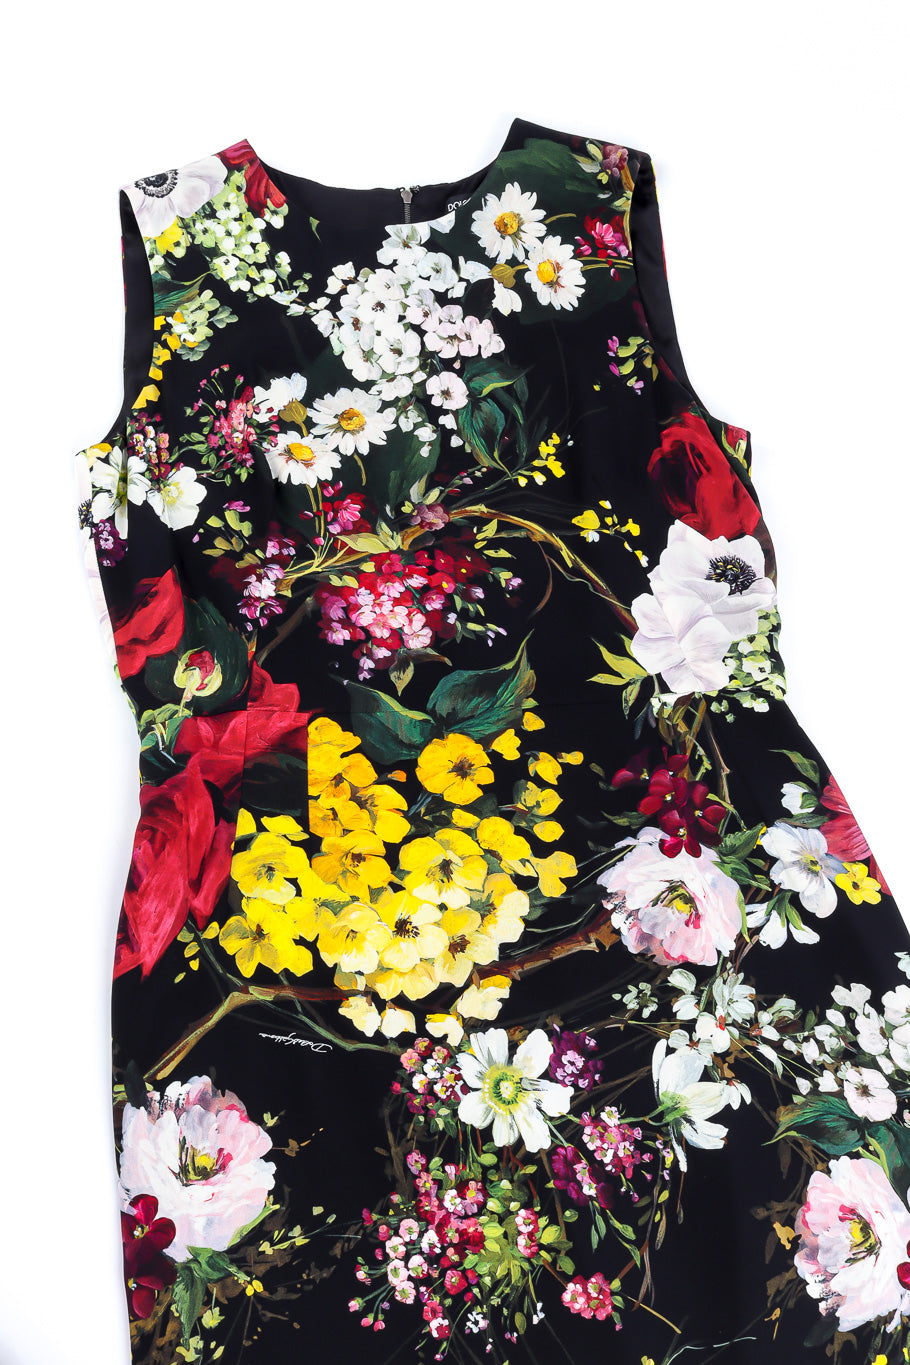 Dolce & Gabbana floral printed sheath dress flat-lay @recessla